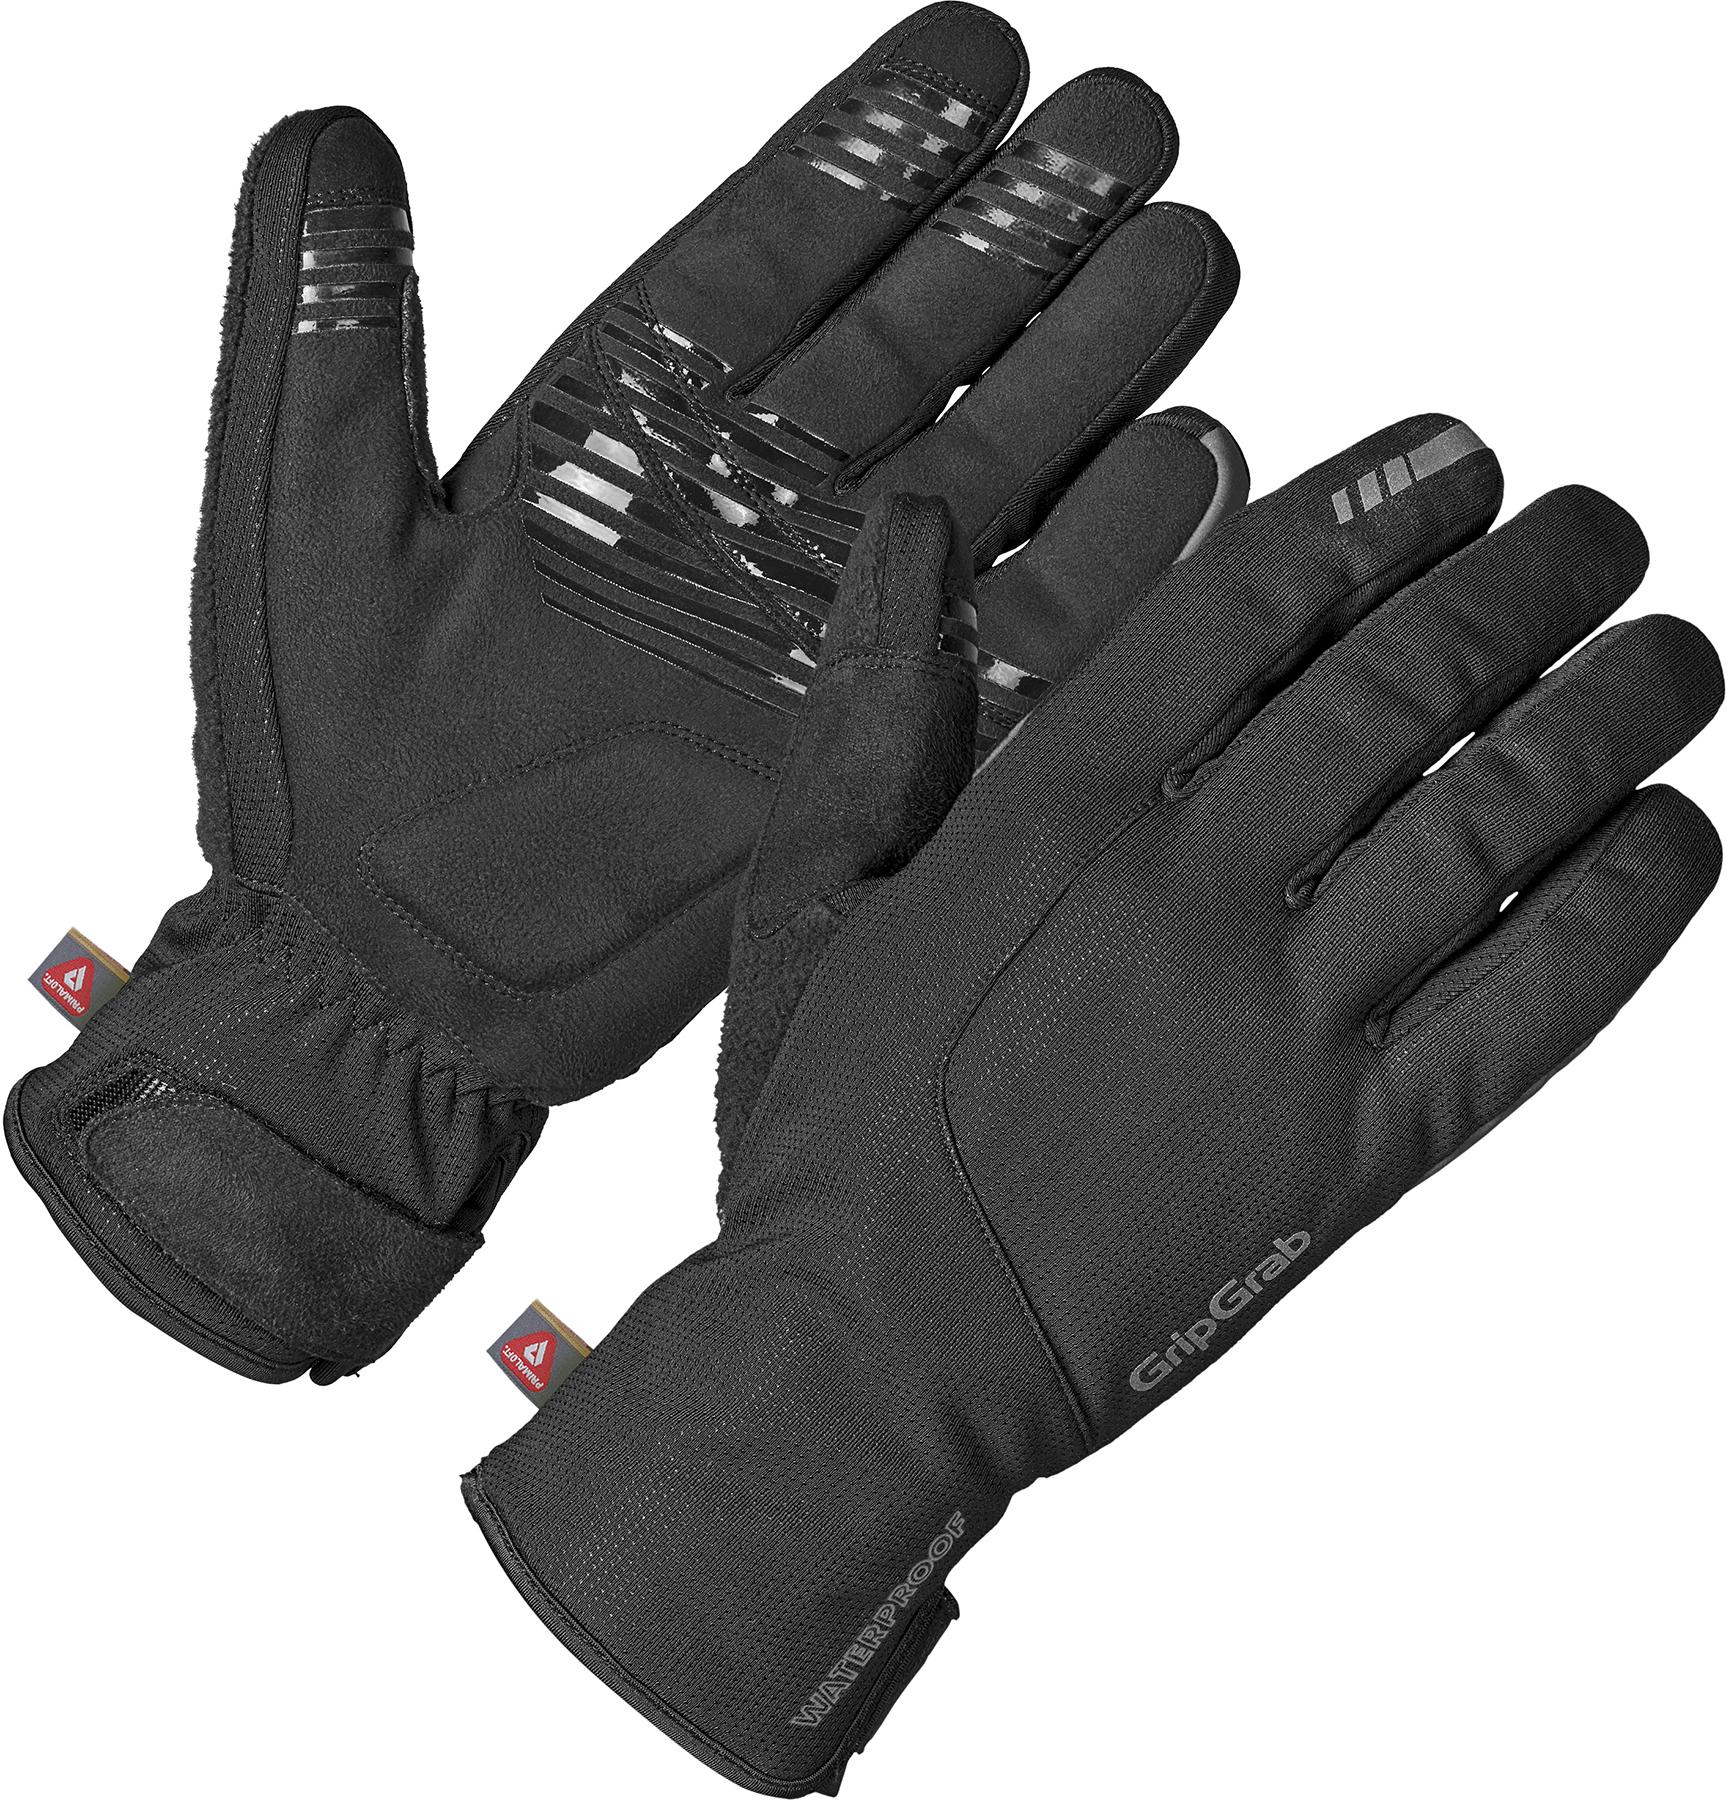 Gripgrab Polaris 2 Waterproof Winter Gloves - Black